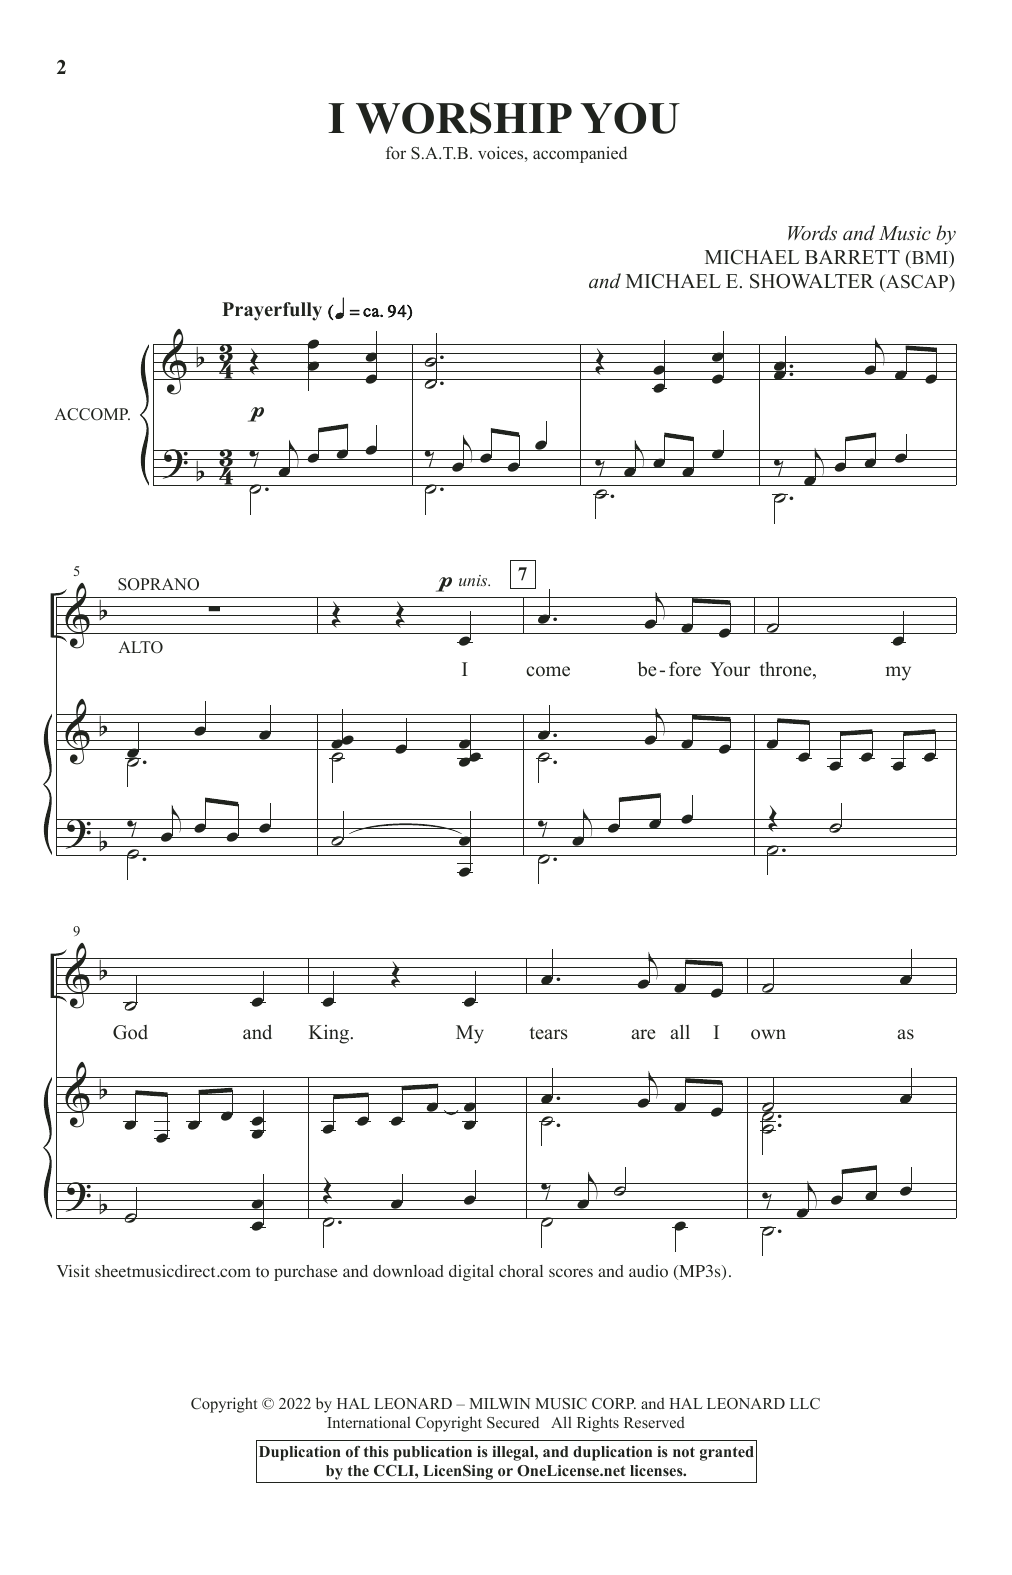 Michael Barrett and Michael E. Showalter I Worship You Sheet Music Notes & Chords for SATB Choir - Download or Print PDF